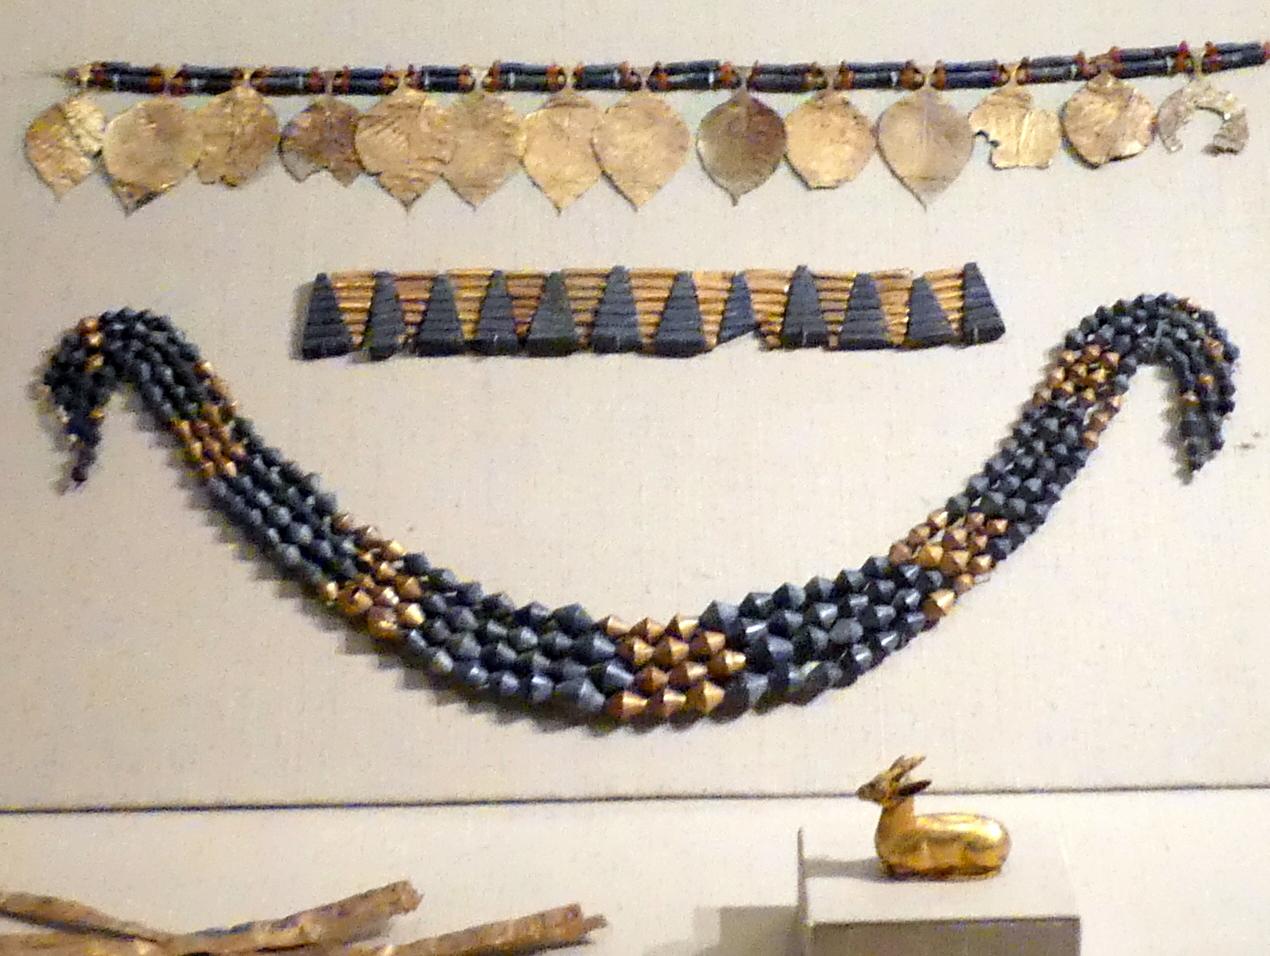 Halskette, Frühdynastisch IIIa (Mesopotamien), 2900 - 2000 v. Chr., 2600 - 2500 v. Chr., Bild 1/2